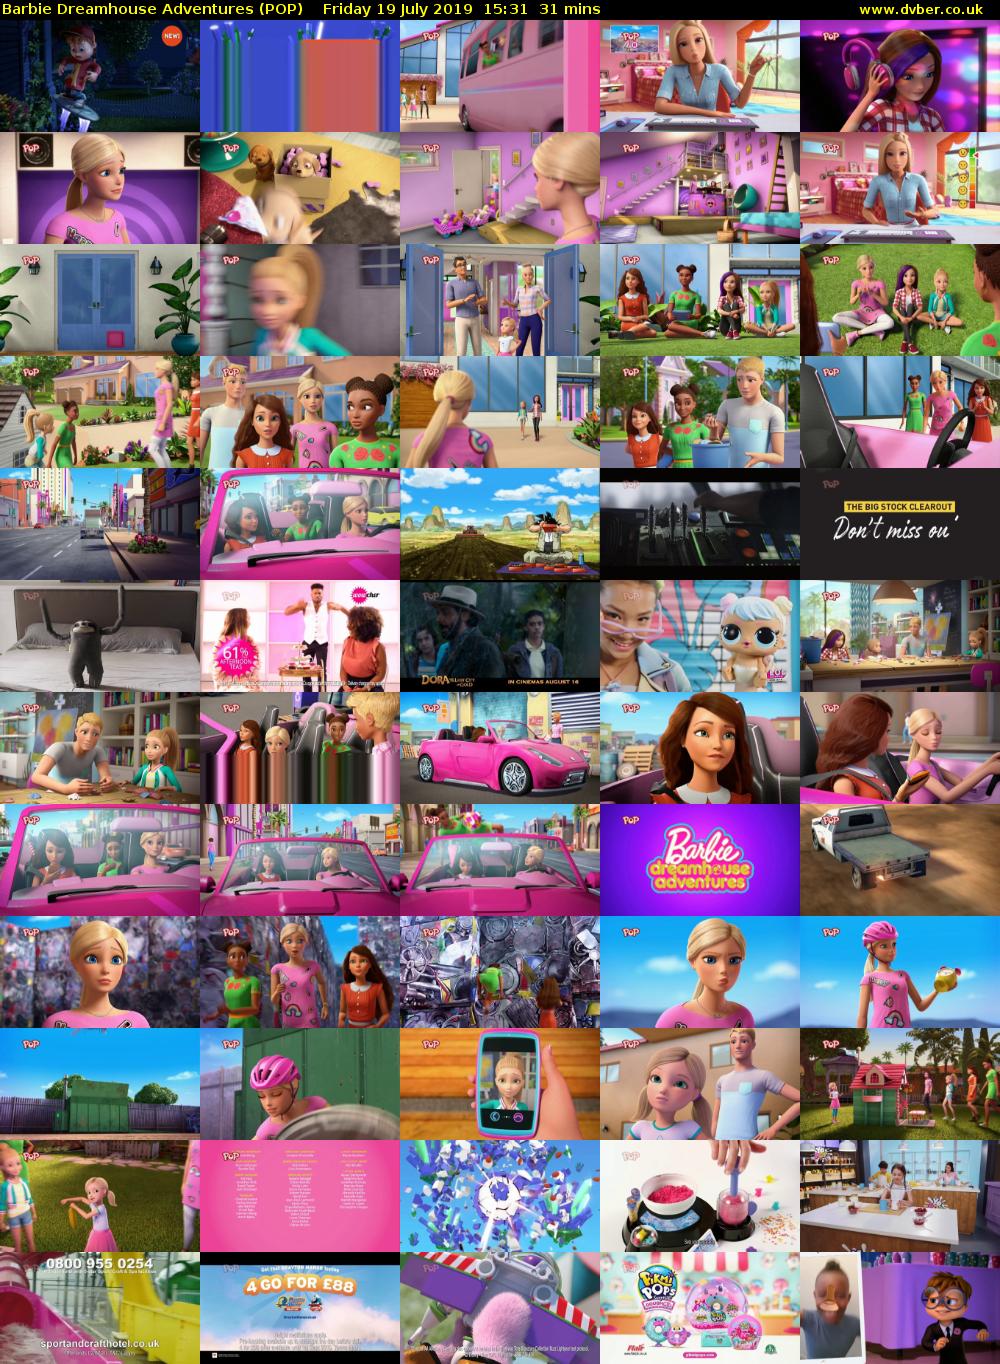 Barbie Dreamhouse Adventures (POP) Friday 19 July 2019 15:31 - 16:02